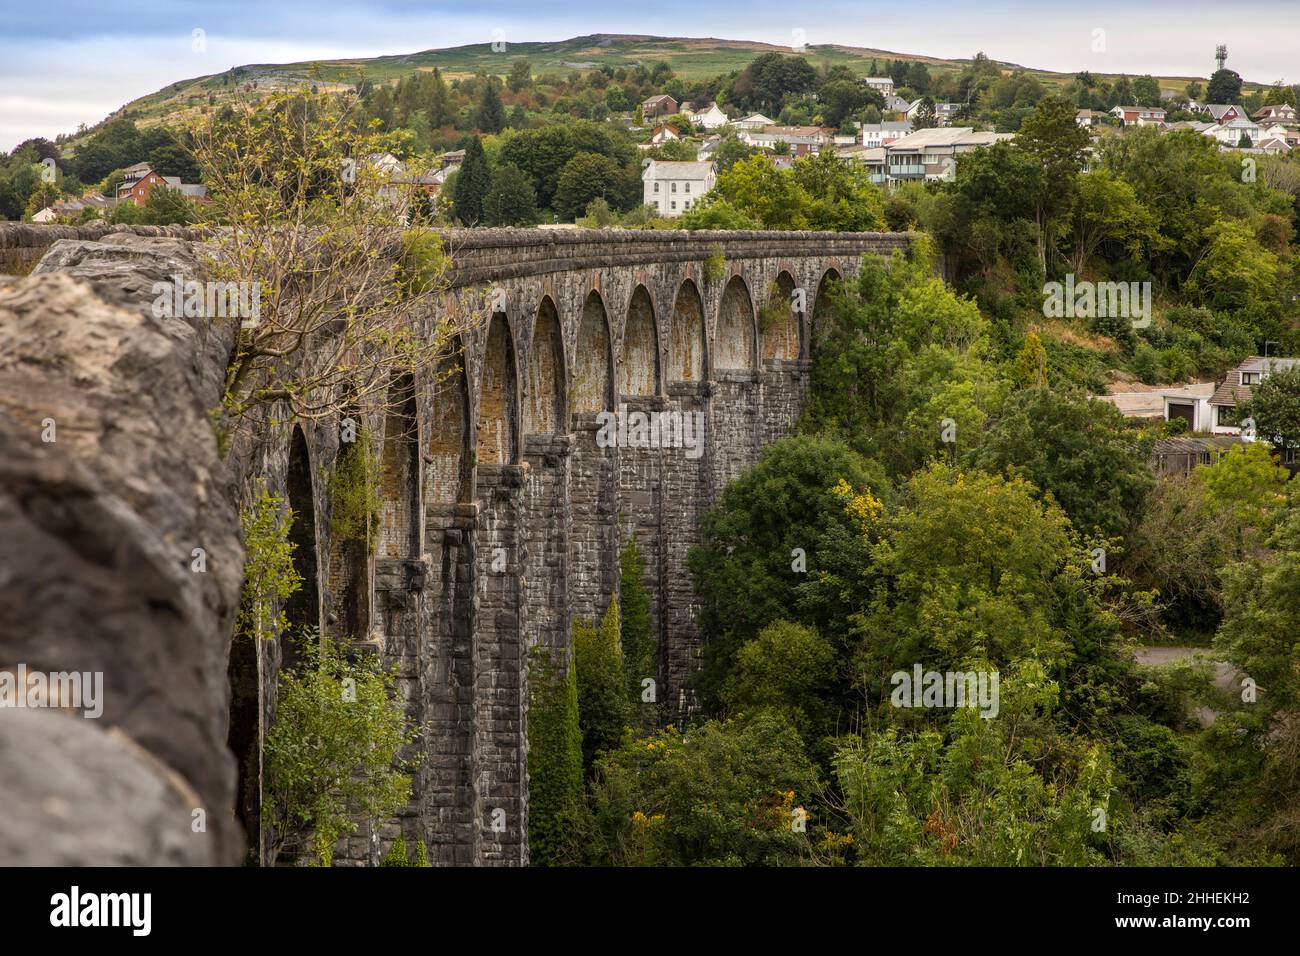 UK, Wales, Merthyr Tydfil, Cefn coed y cymmer, railway viaduct carrying Taff Trail over River Taff Stock Photo